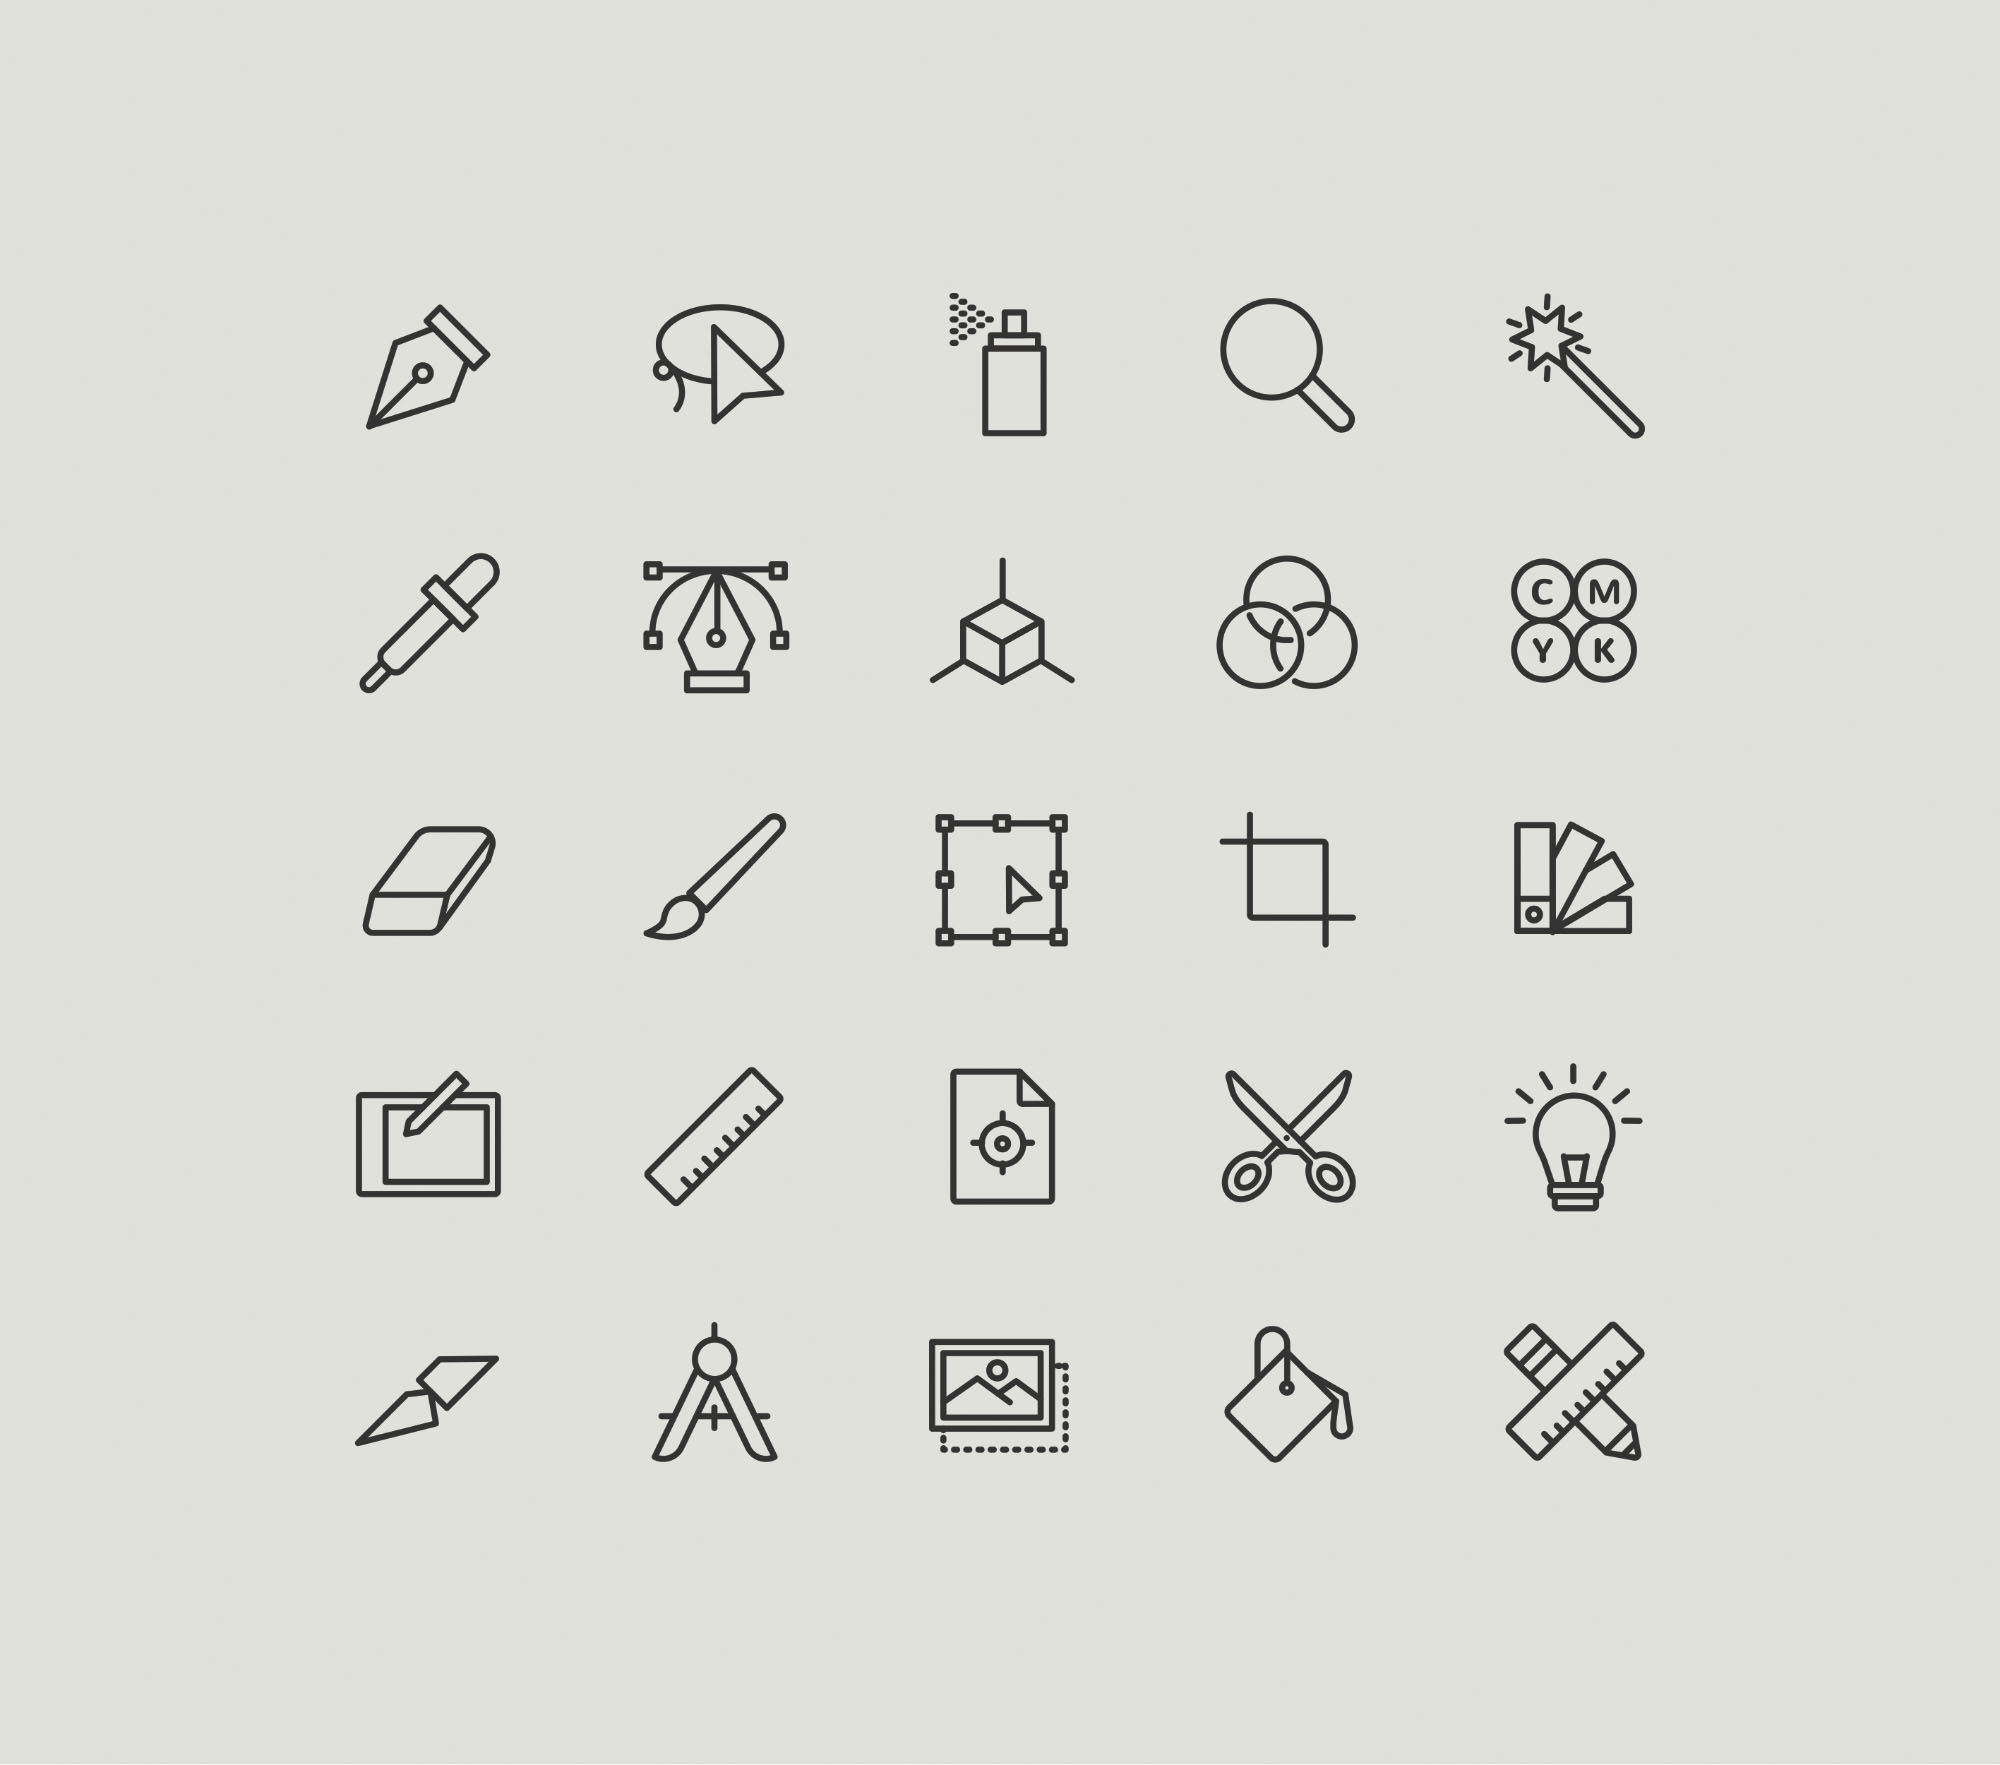 25枚简单图形设计矢量图标 25 Simple Graphic Design Icons插图(1)